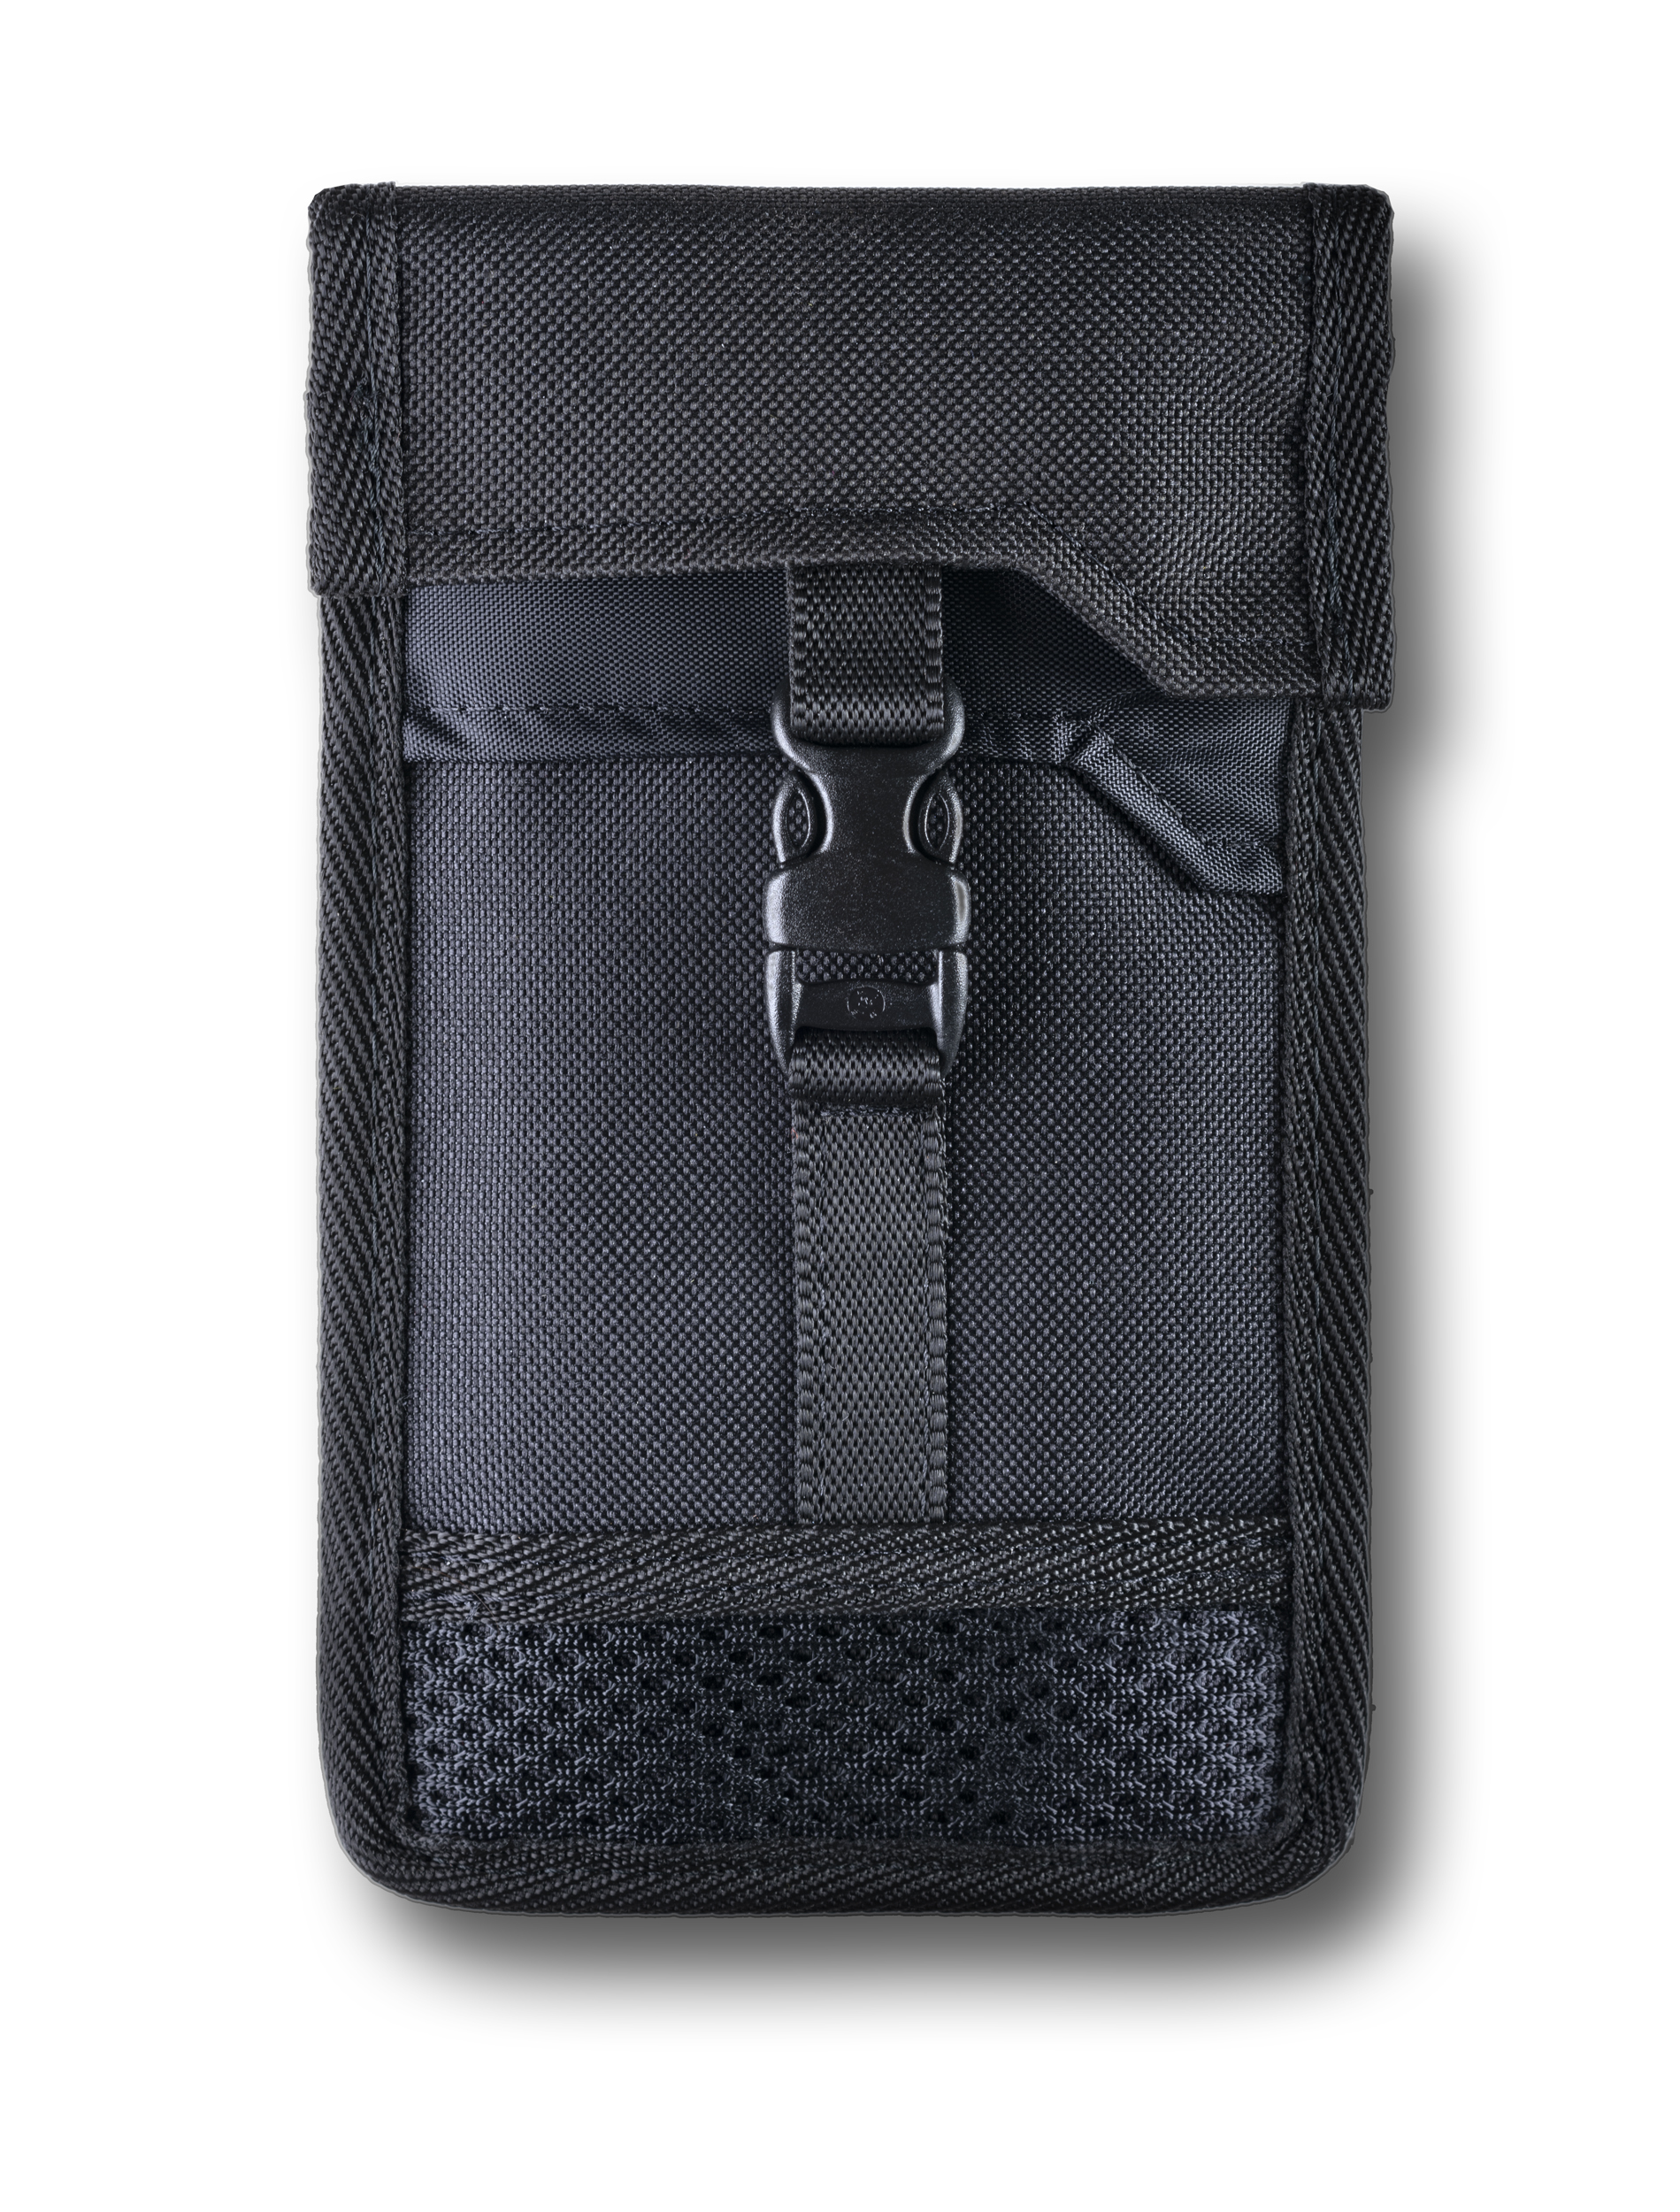 RF Shielded Phone Shield Lockable Faraday Bag - Med Res